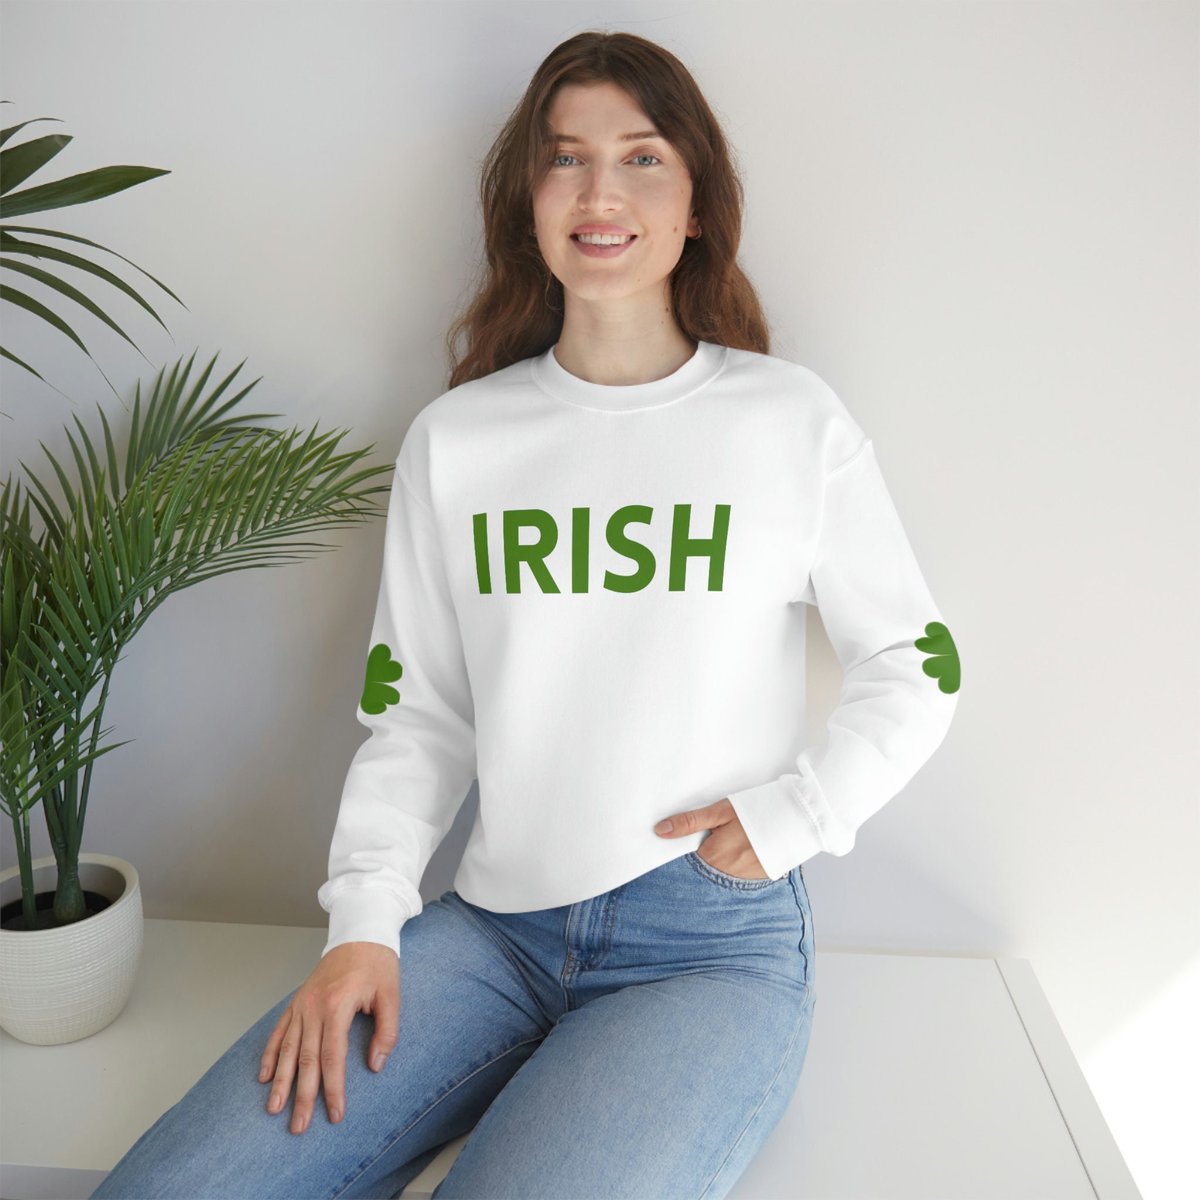 Excited to share the latest addition to my #etsy shop: Irish w/ Clover Elbows Sweatshirt.  Perfect for St. Patty's Day! t etsy.me/3X5Vdye 

#Stpatrickday #Stpattysday #saintpatrick #irish #ireland #boston #chicago #philadelphia #americanirish #shopsmall